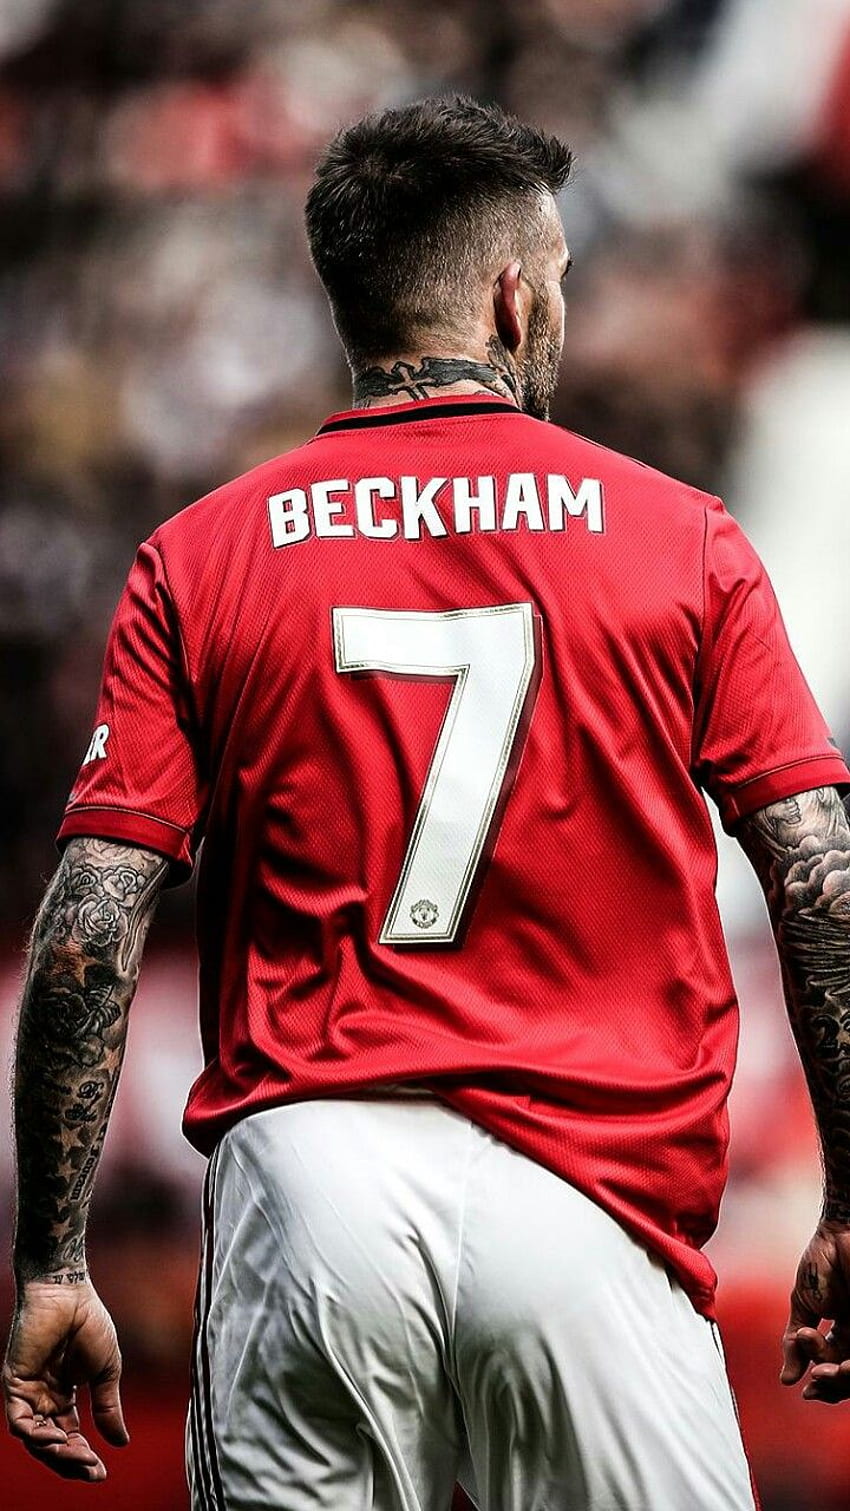 Beckham. David beckham manchester united, David beckham football y Beckham football fondo de pantalla del teléfono